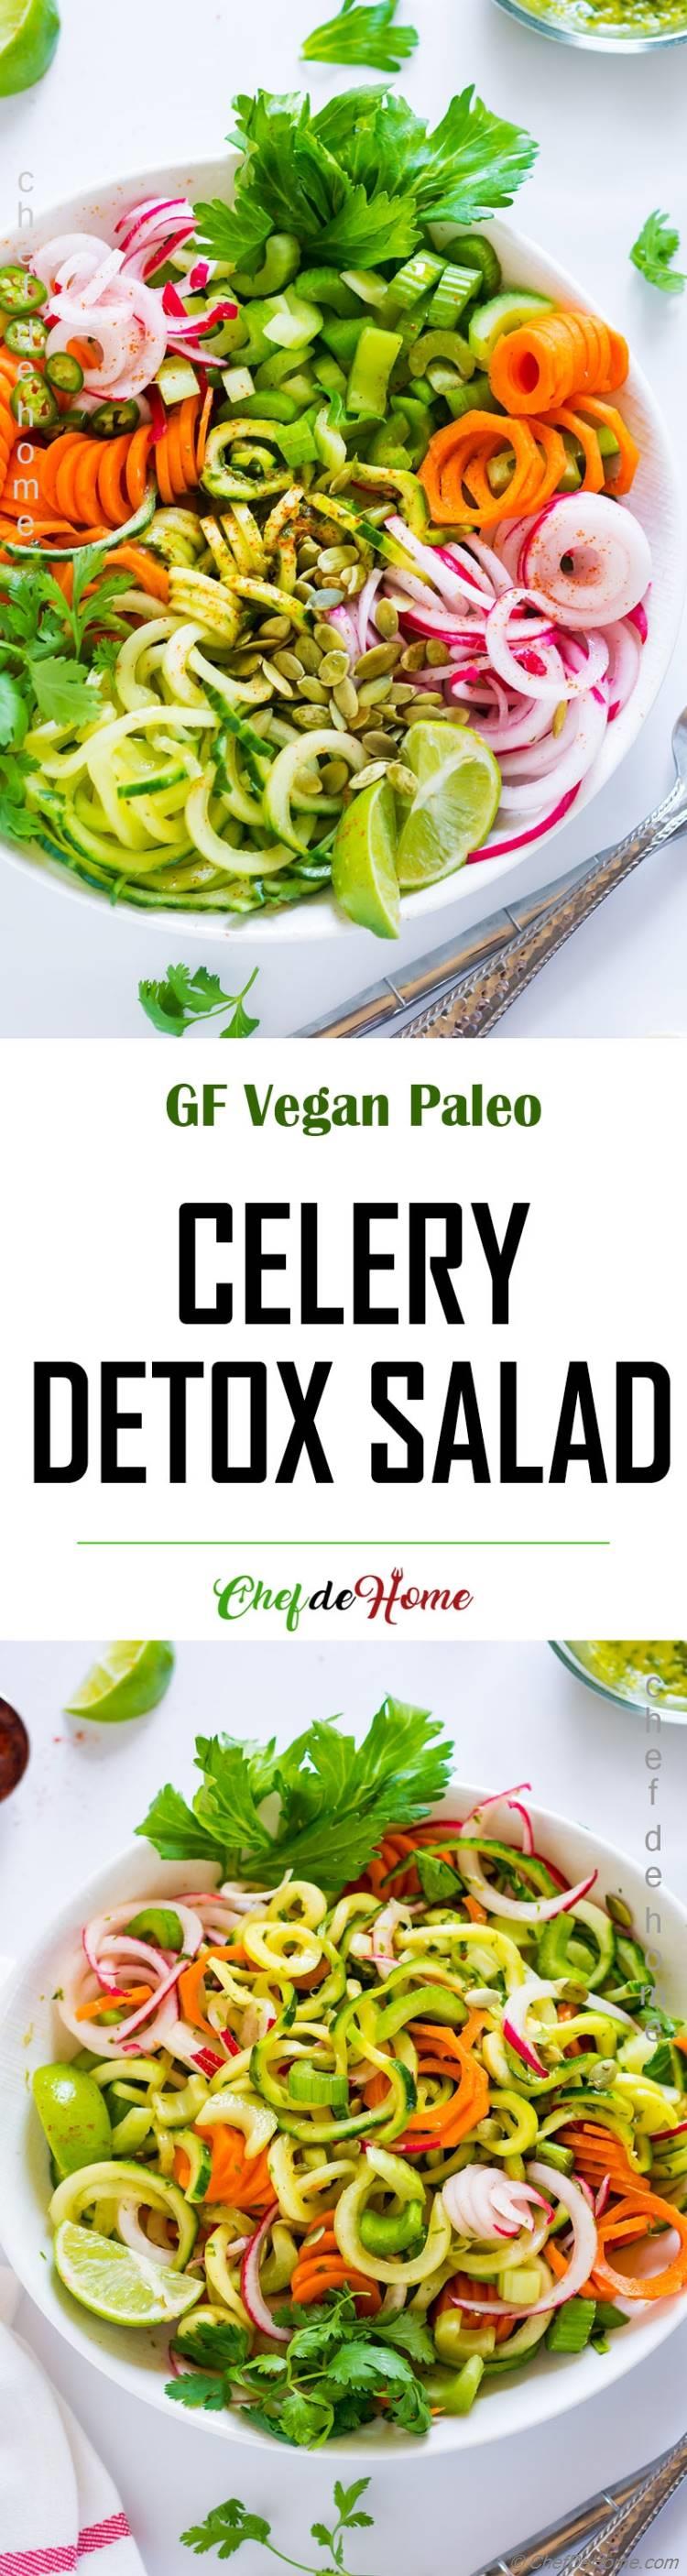 Celery Detox Salad